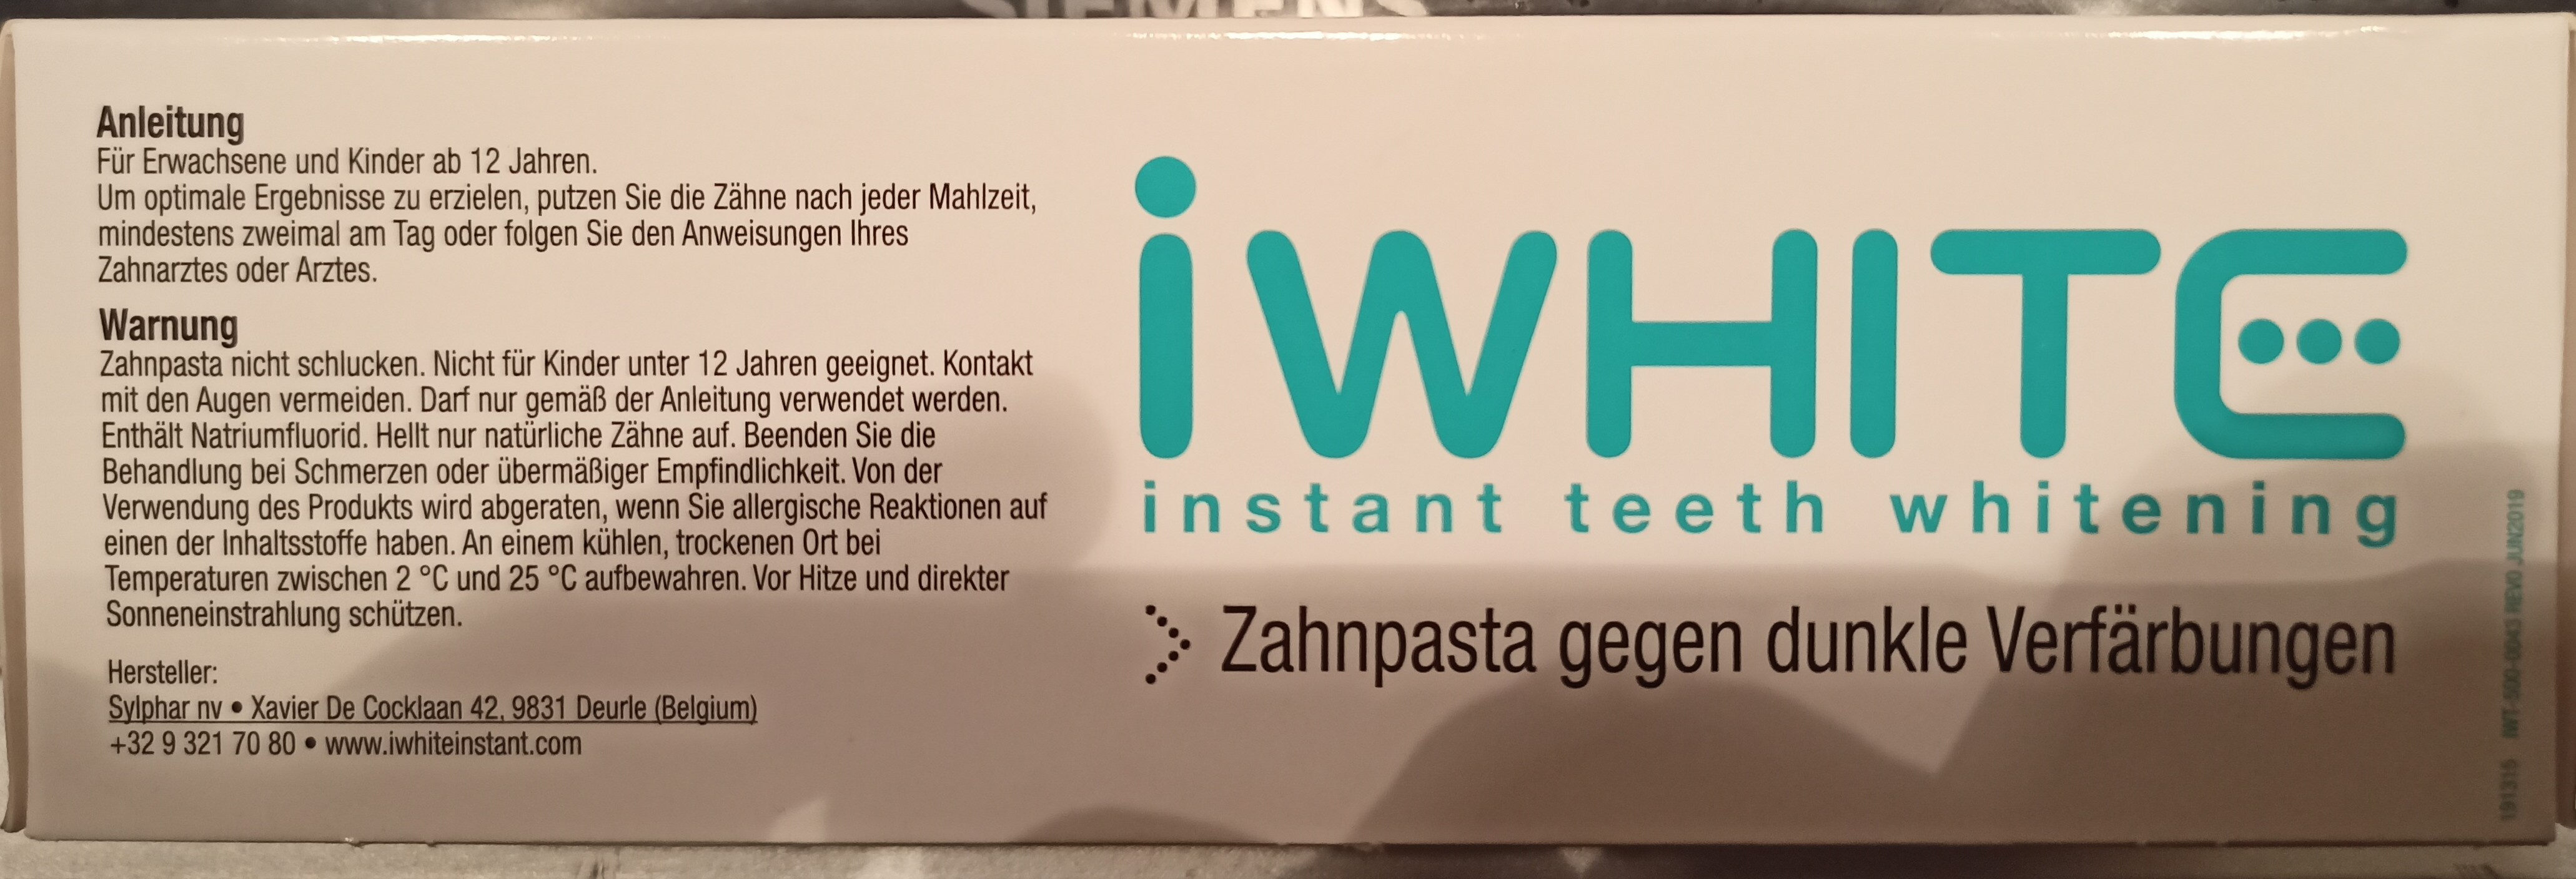 instant teeth whitening - Produit - de